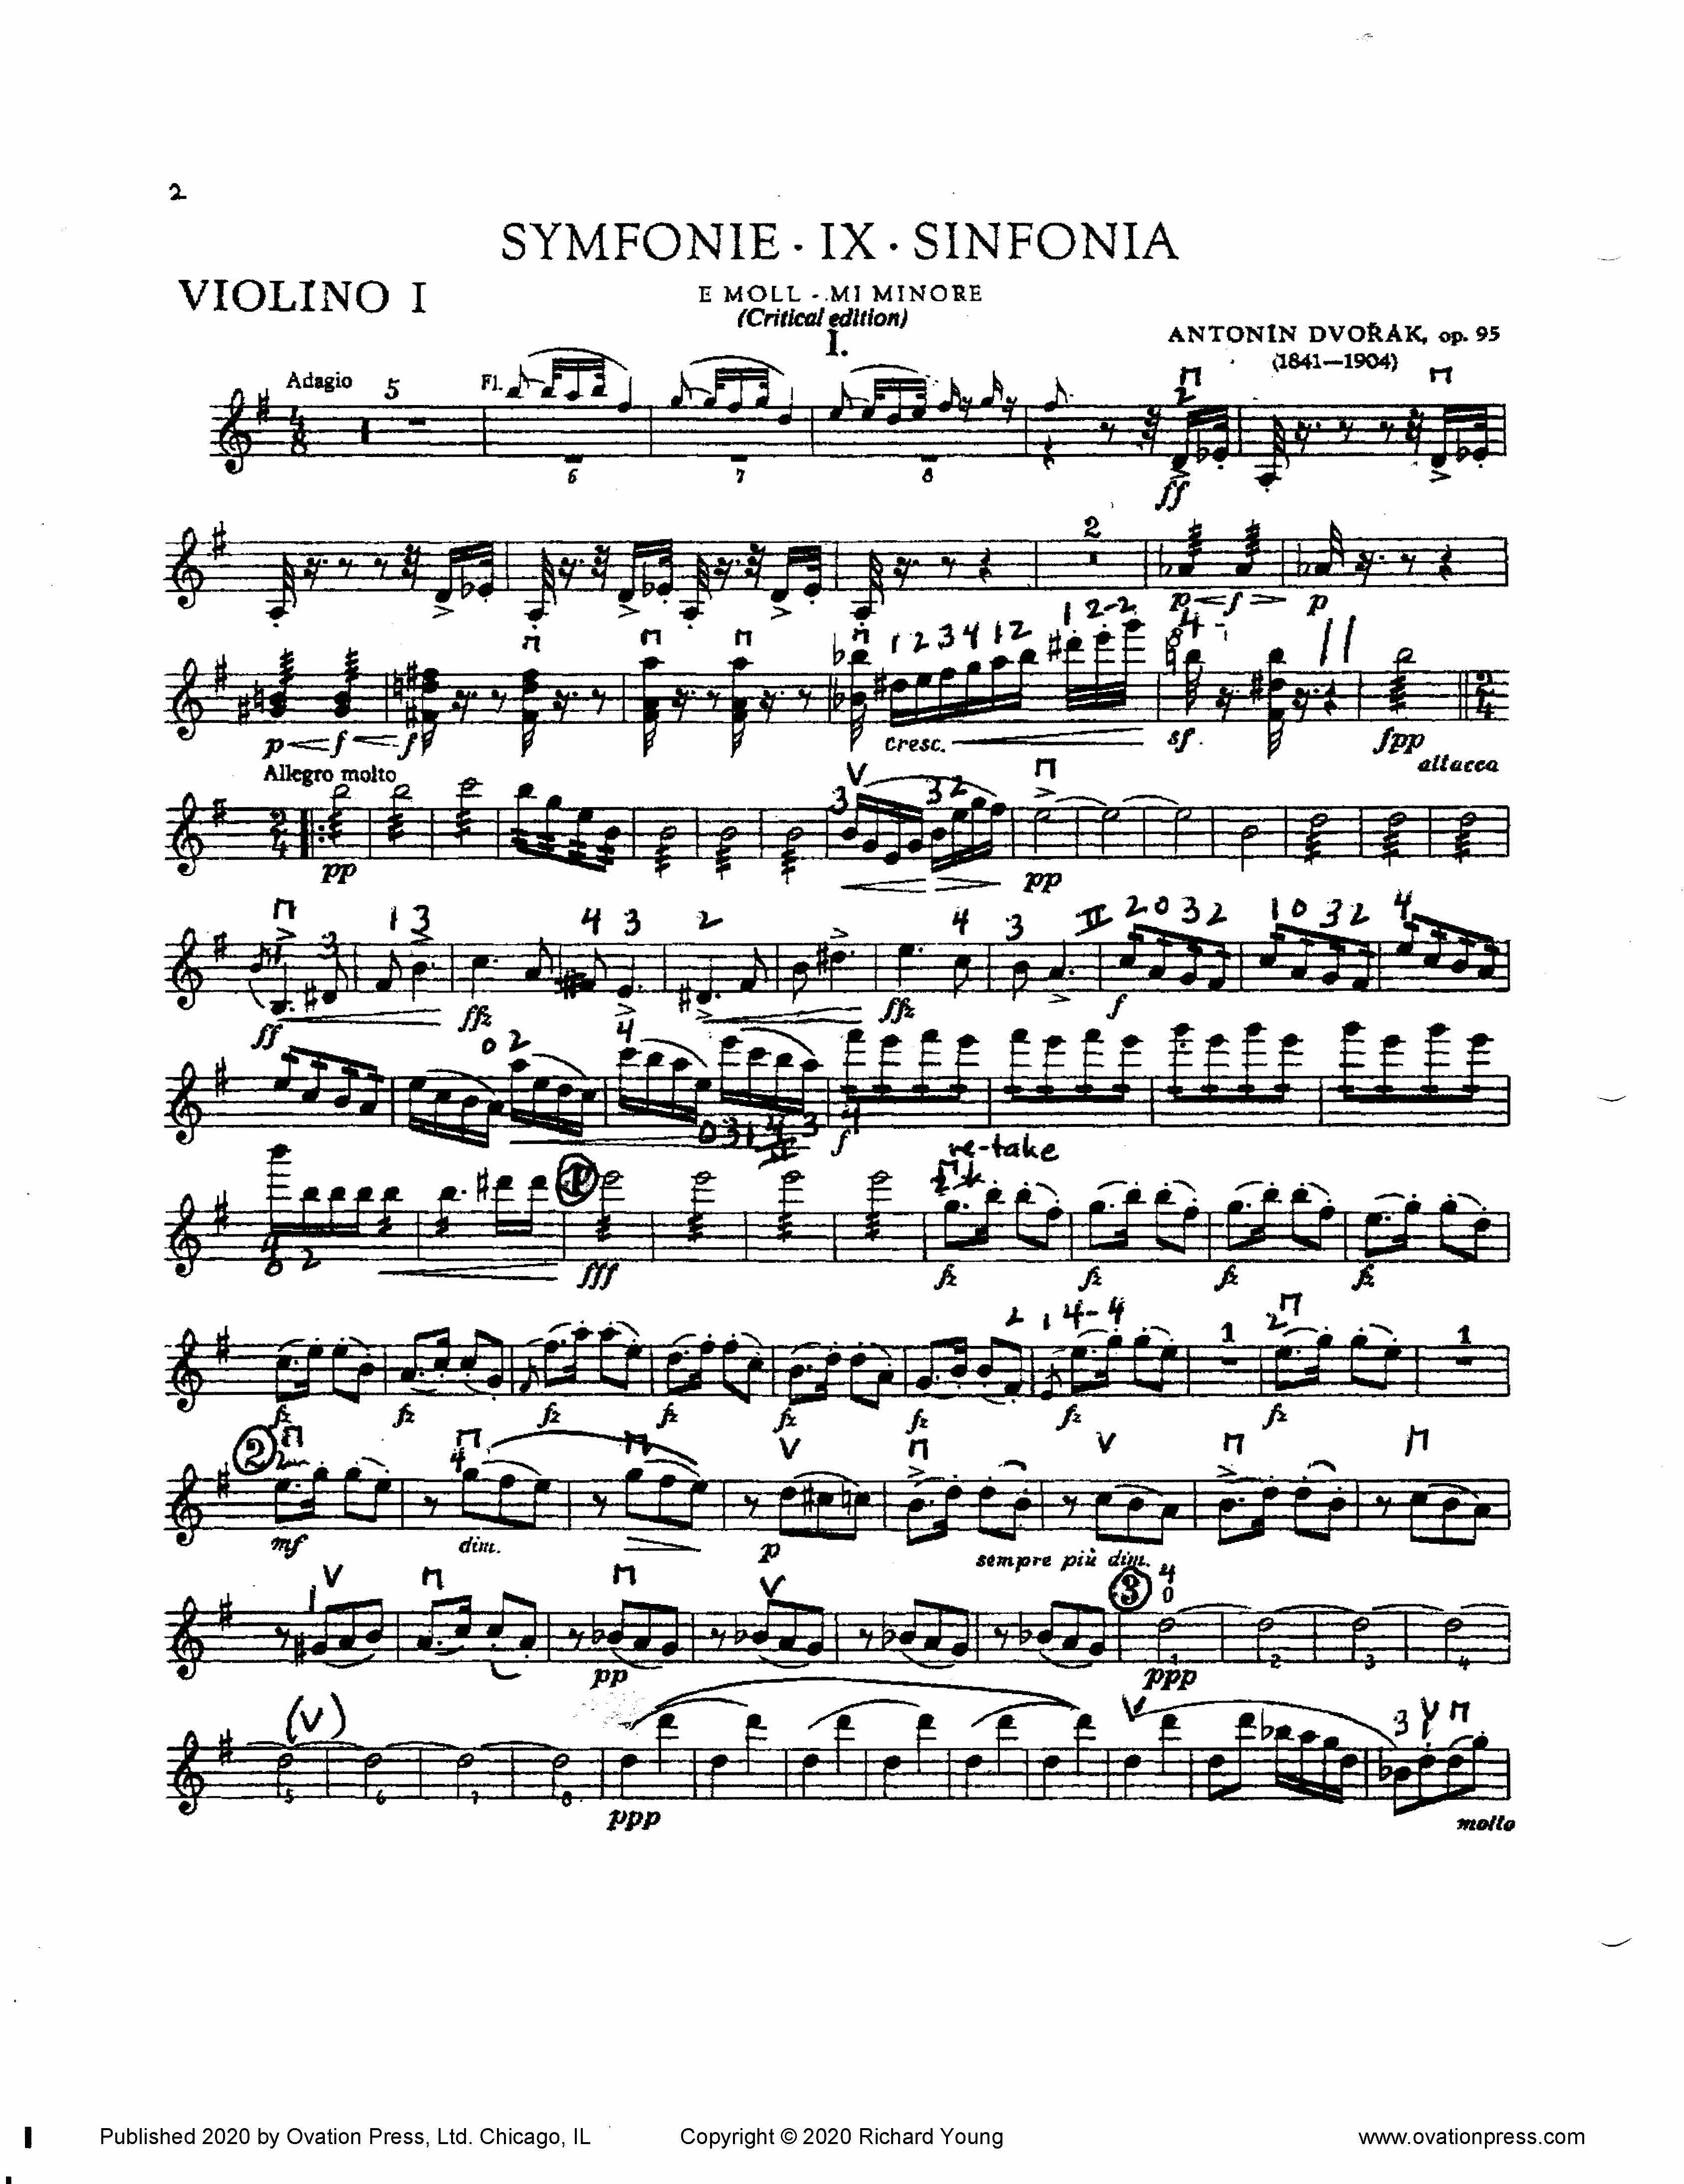 Symphony No. 9 (for Advanced Orchestra) String Parts (Vln I & II, Vla, Vcl,  Bass)